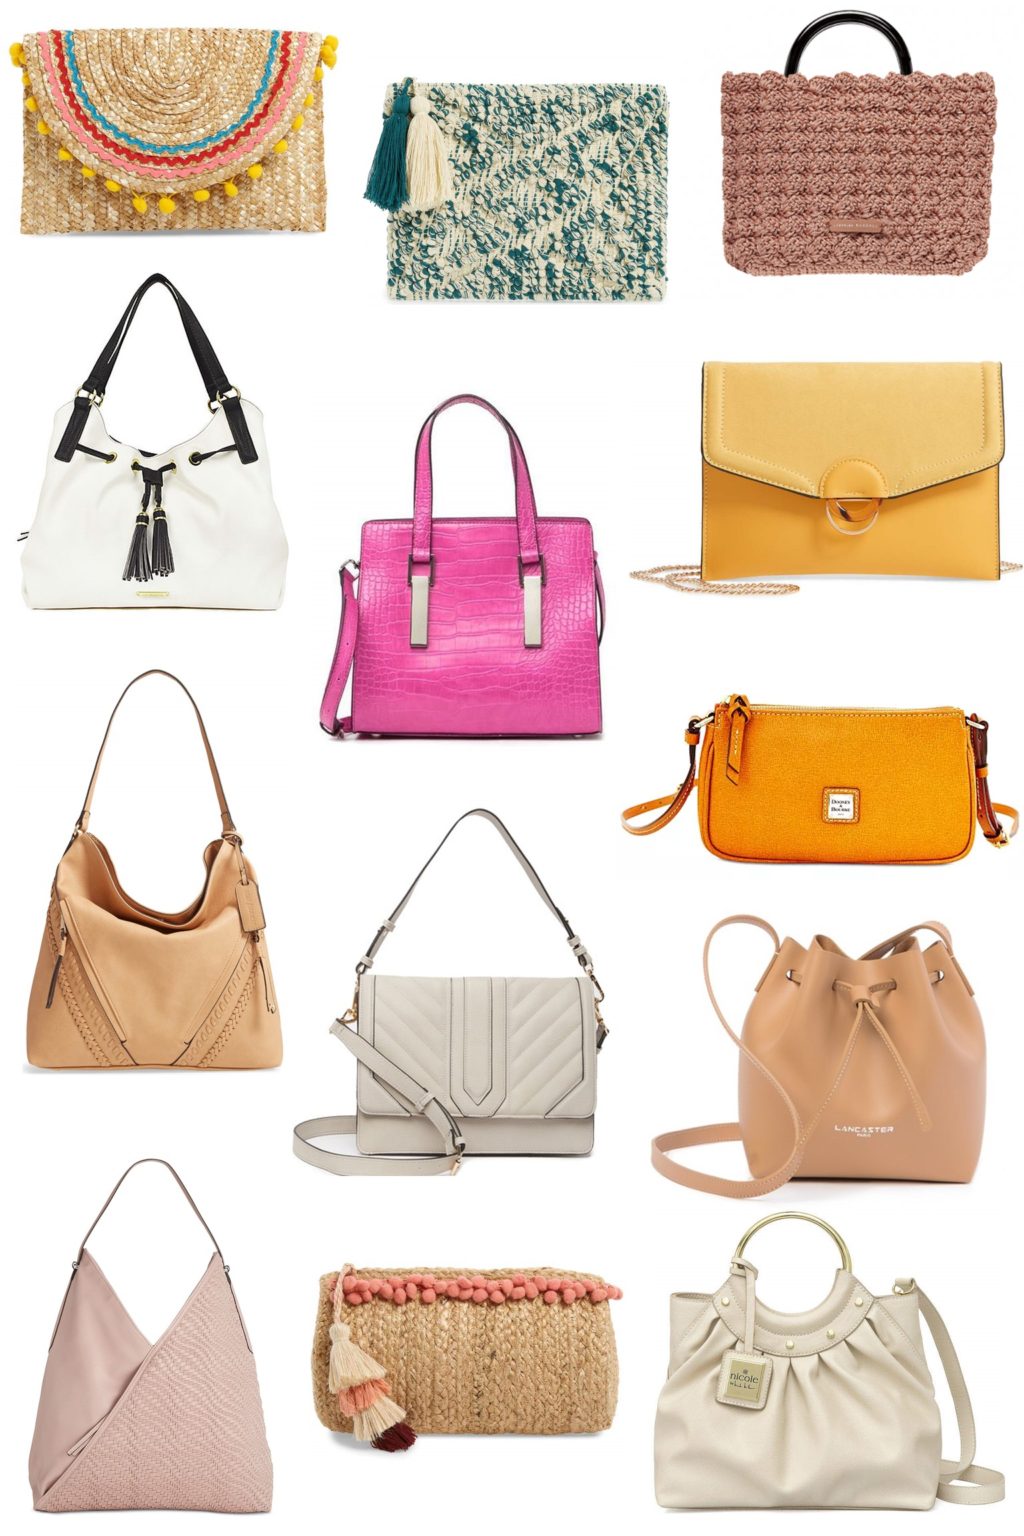 13 Spring Handbags That Won't Break the Bank – Dressed in Faith